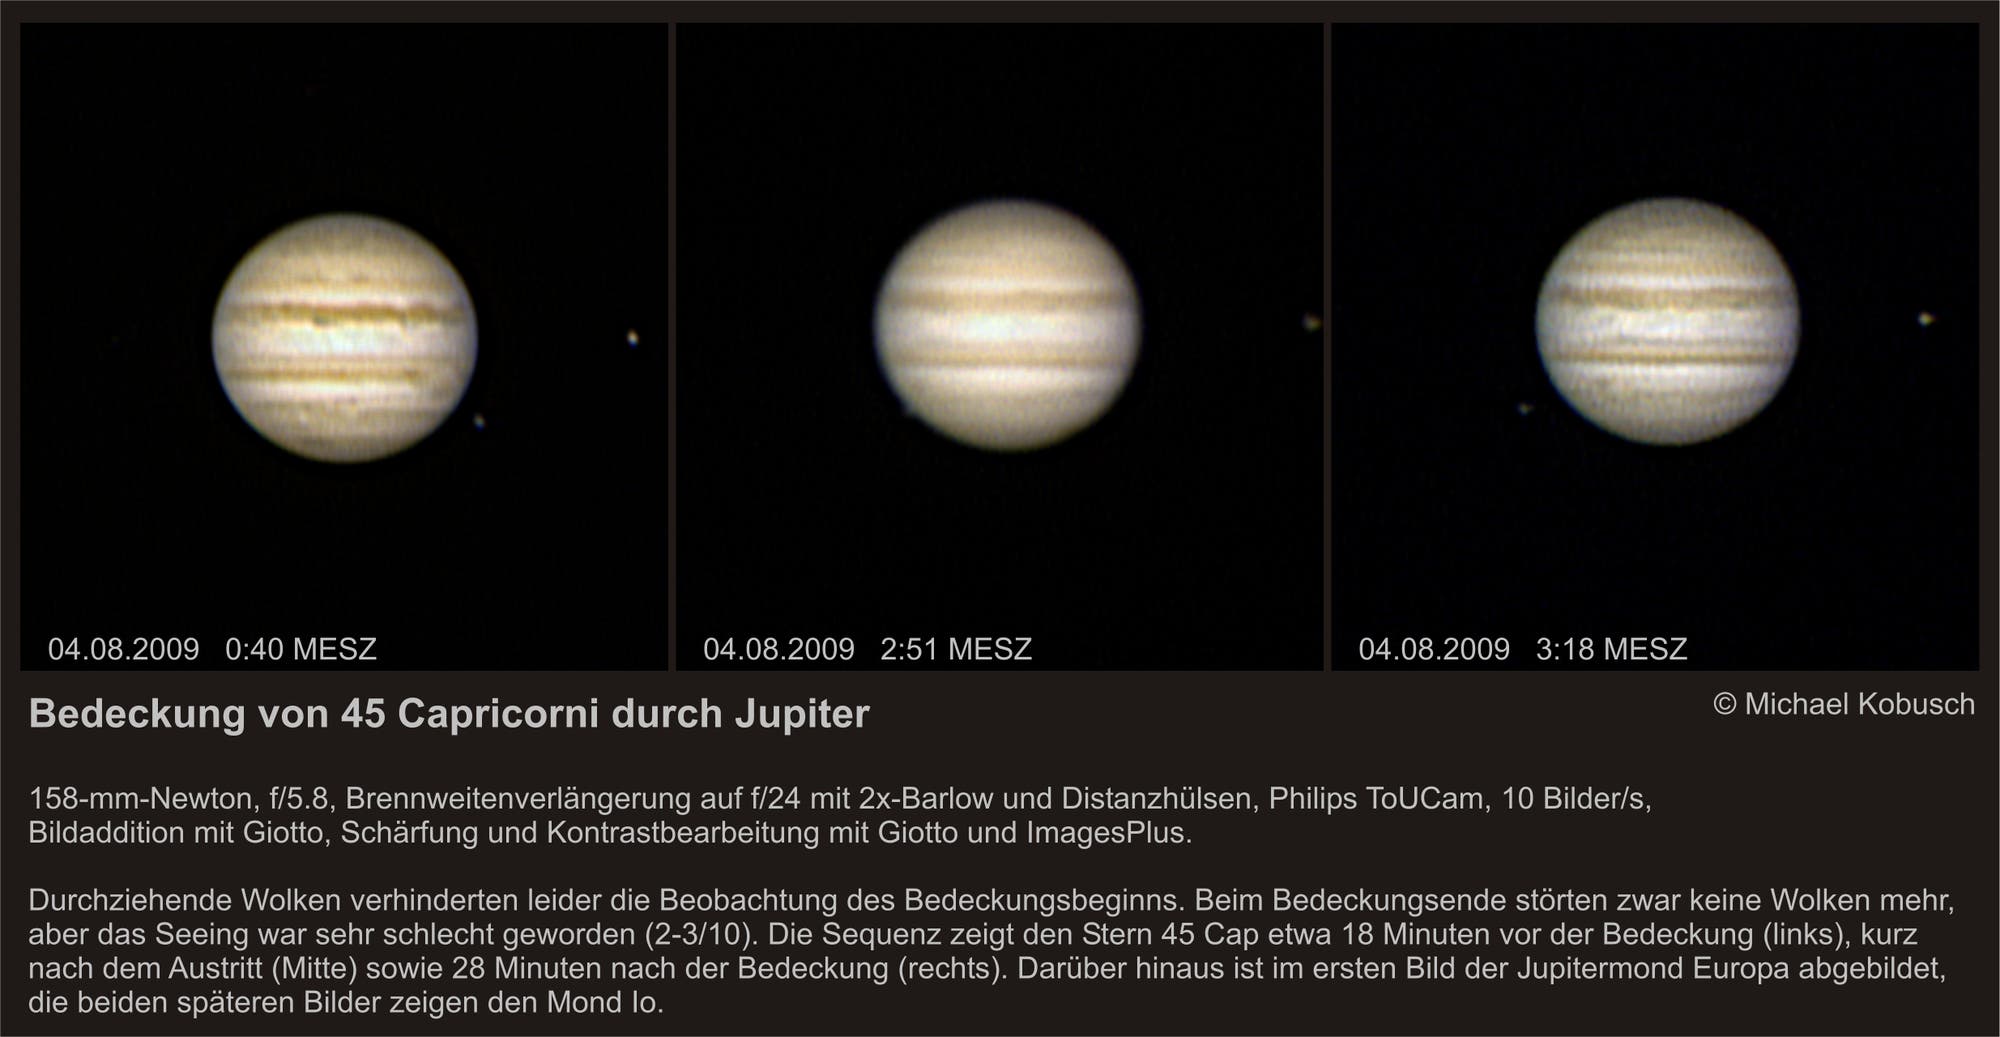 Jupiter bedeckt 45 Capricorni